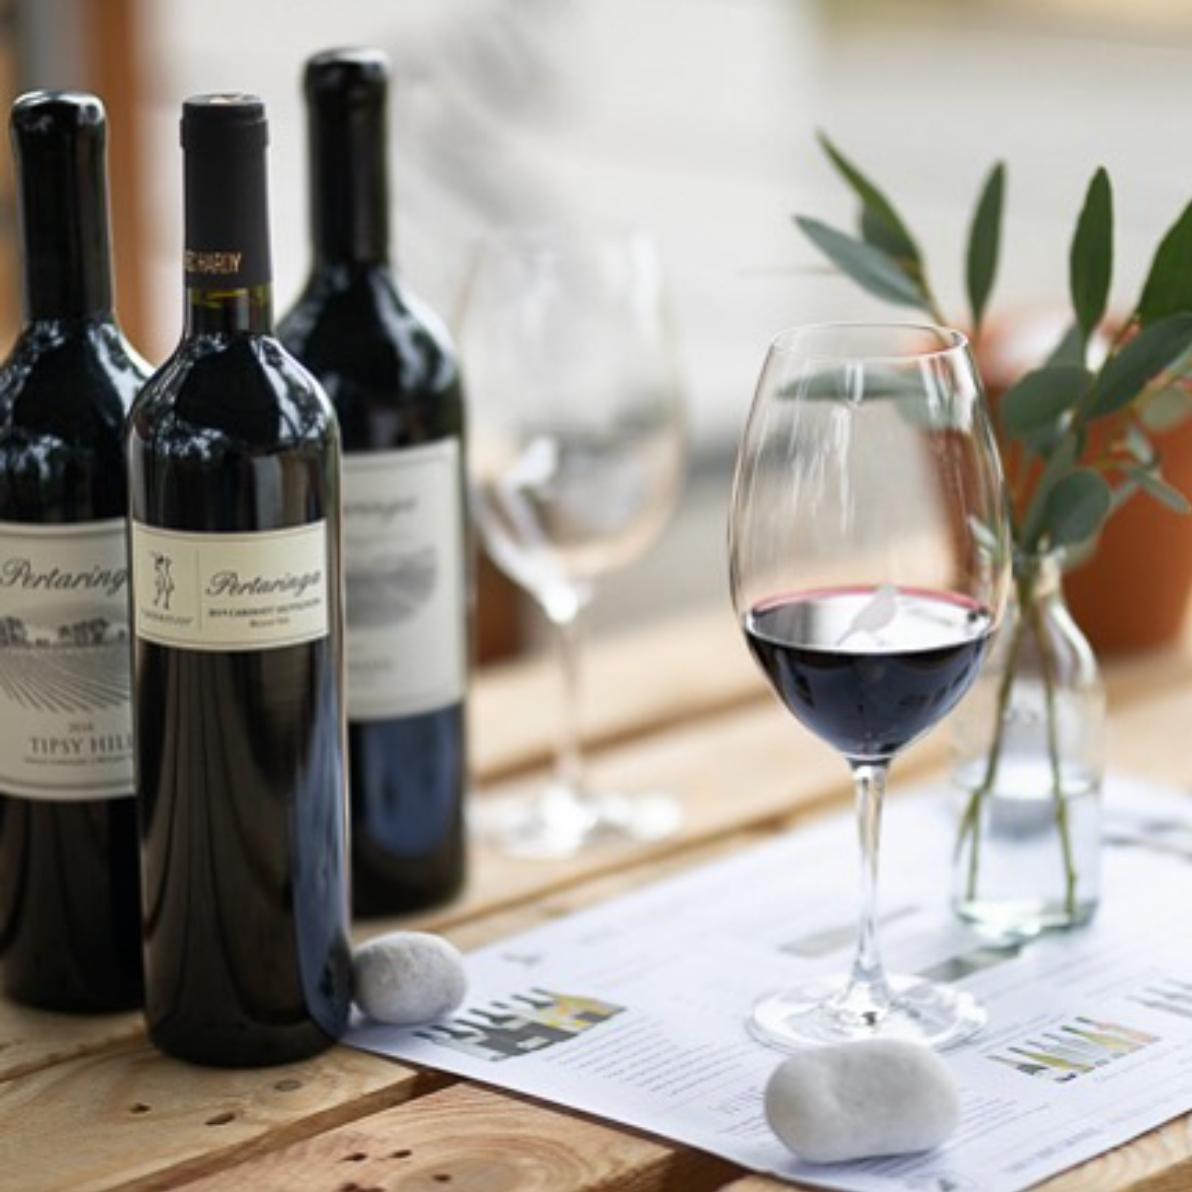 PERTARINGA UNDERSTUDY CABERNET SAUVIGNON 2019 - Zhen Premium Wines